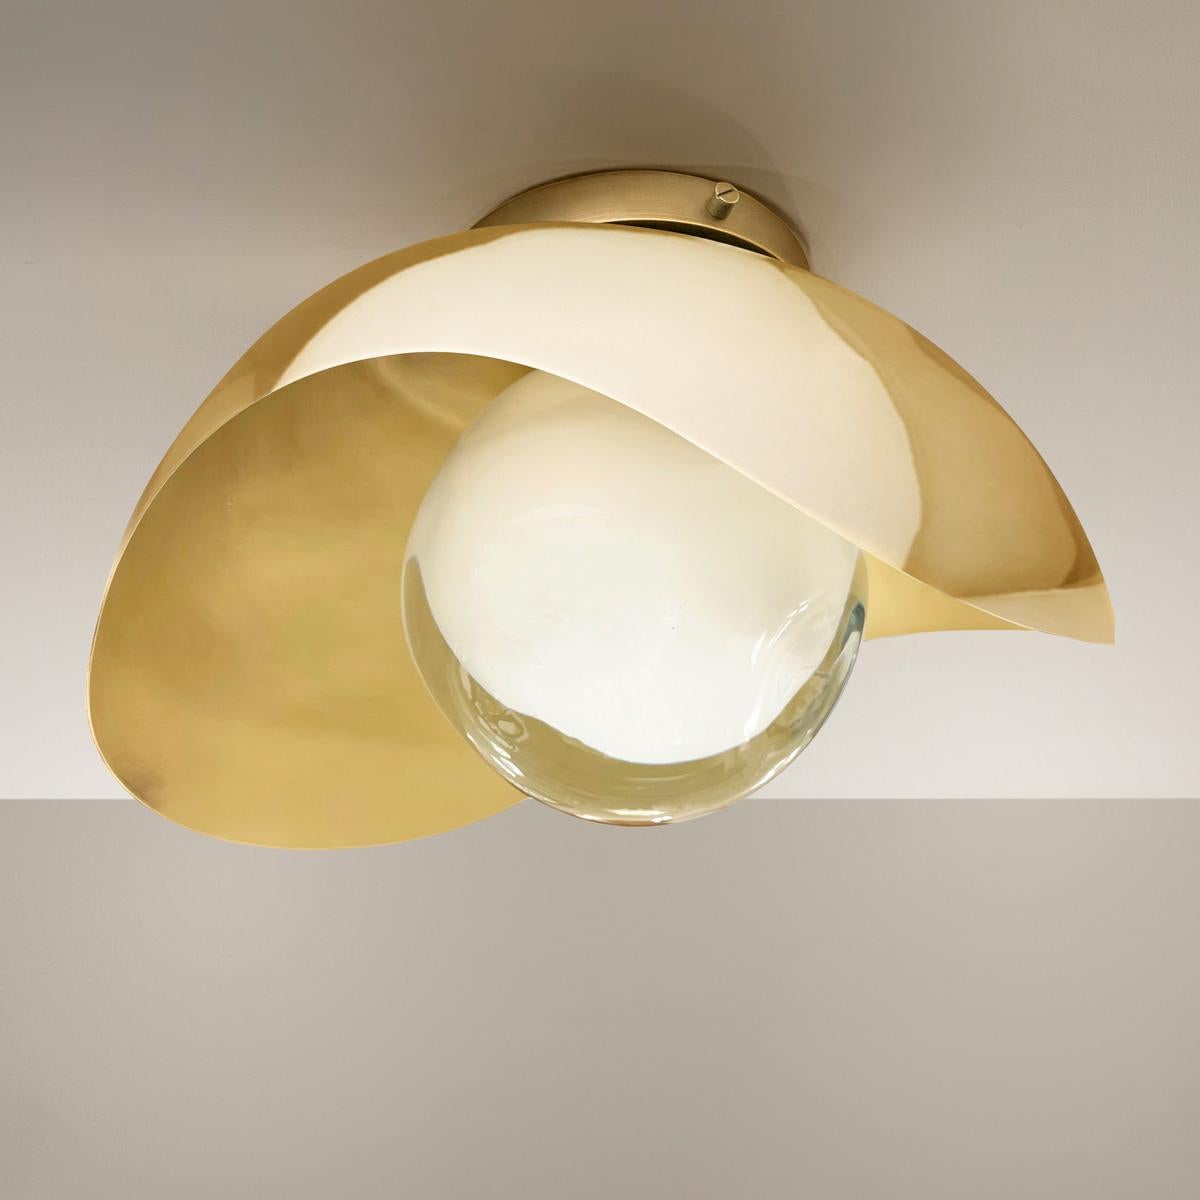 Perla Flushmount Ceiling Light by Gaspare Asaro-Satin Brass/Acqua Finish For Sale 7